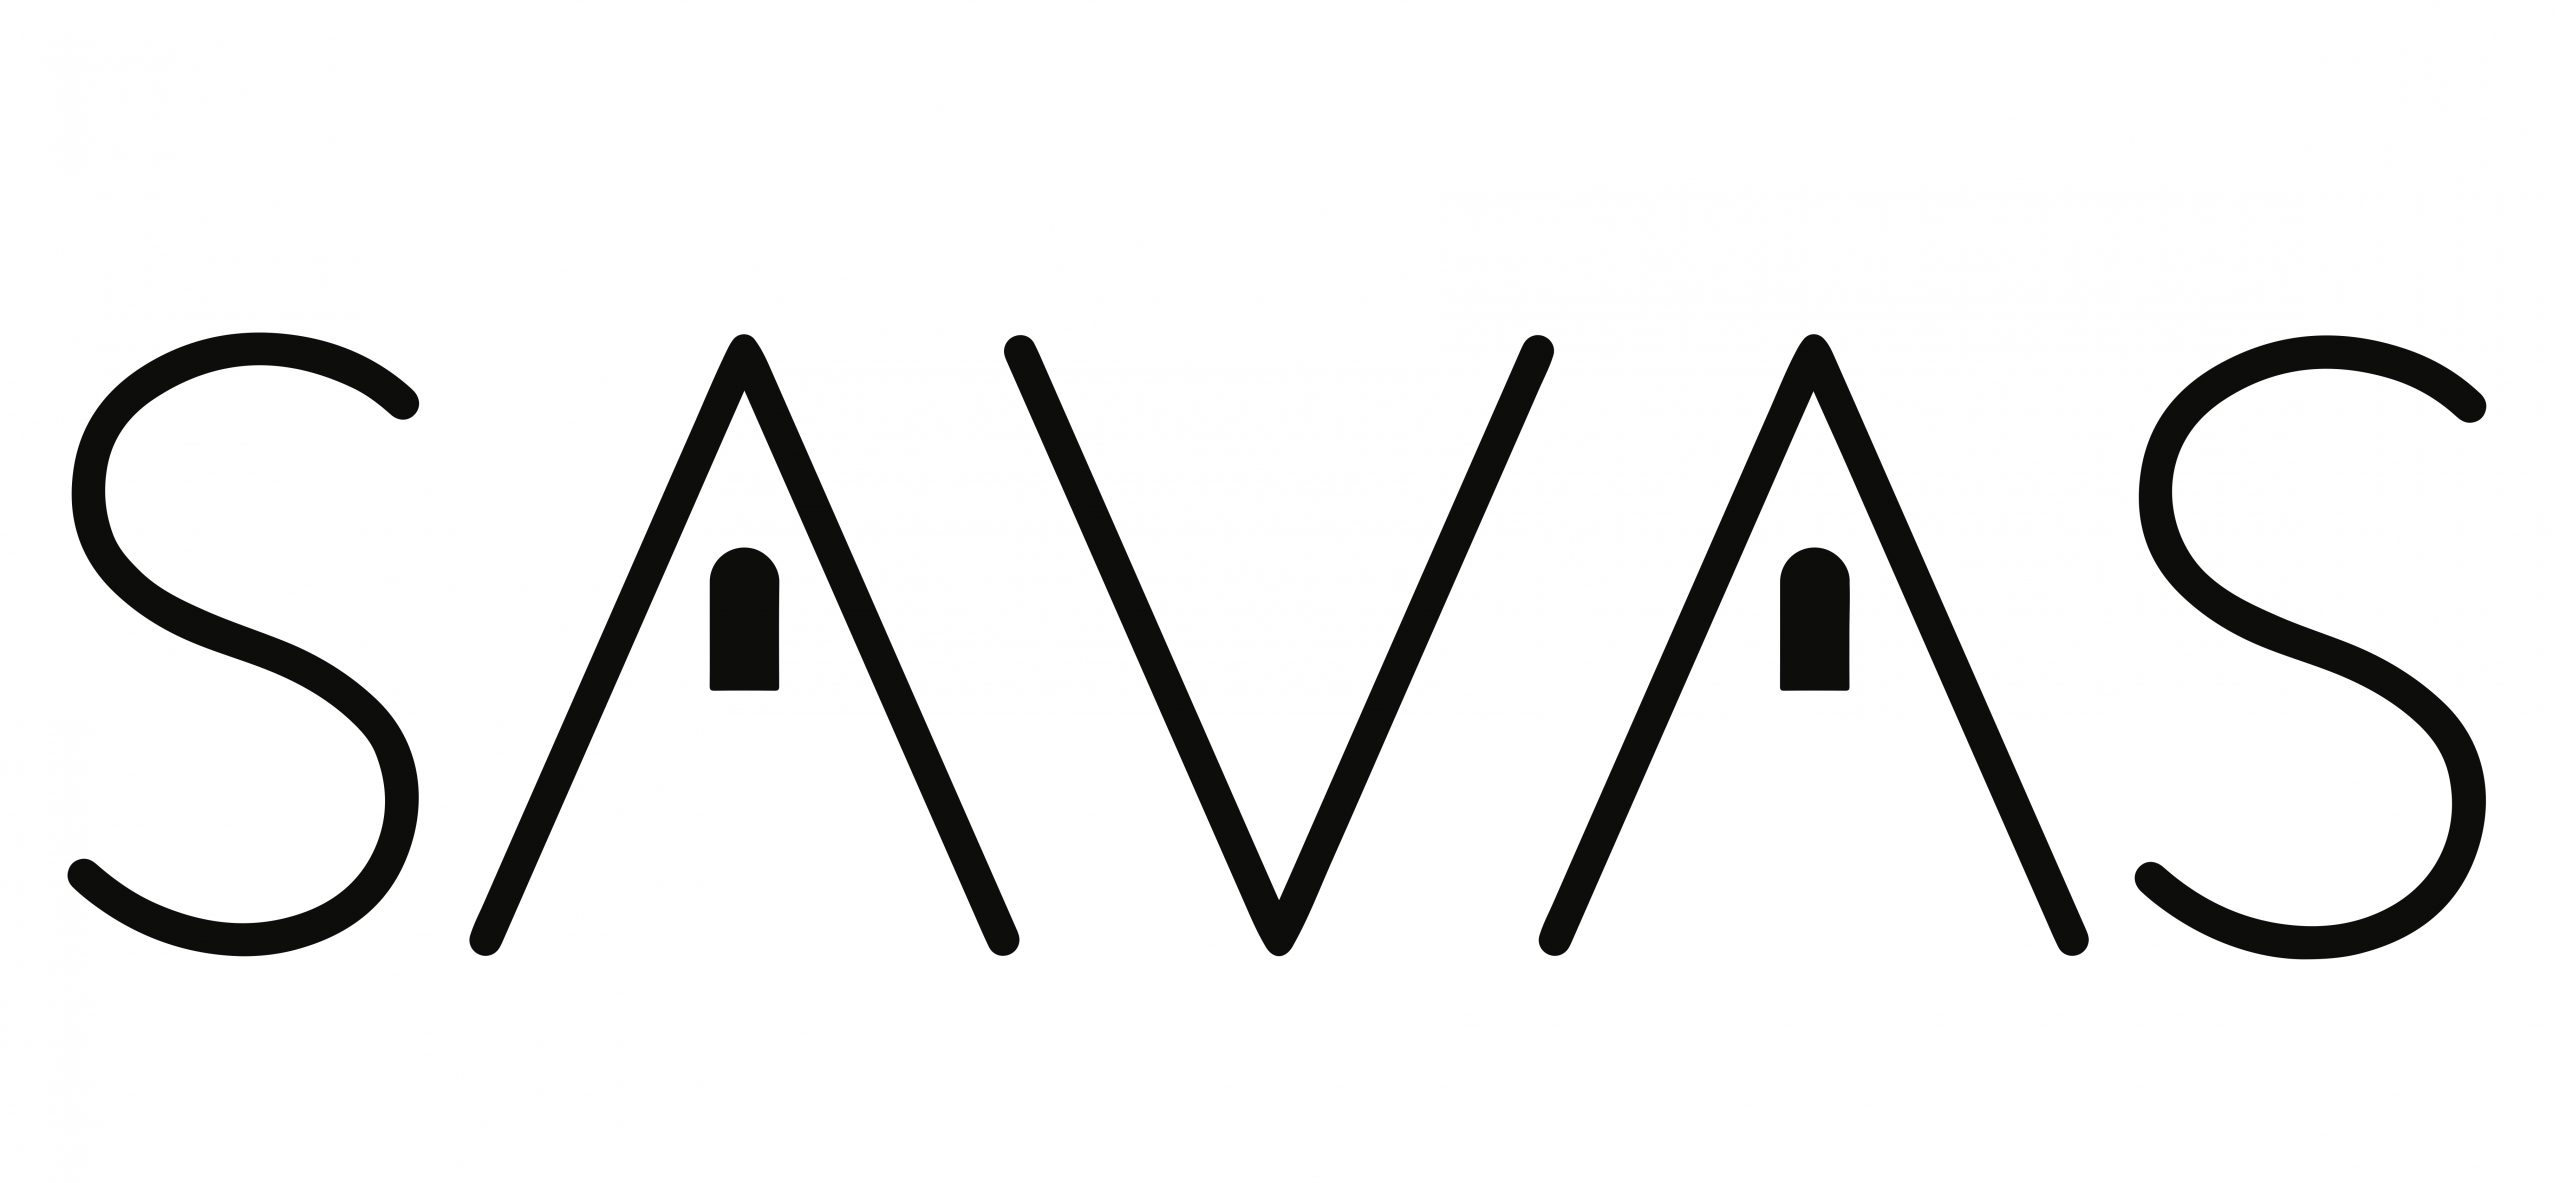 Savas logo